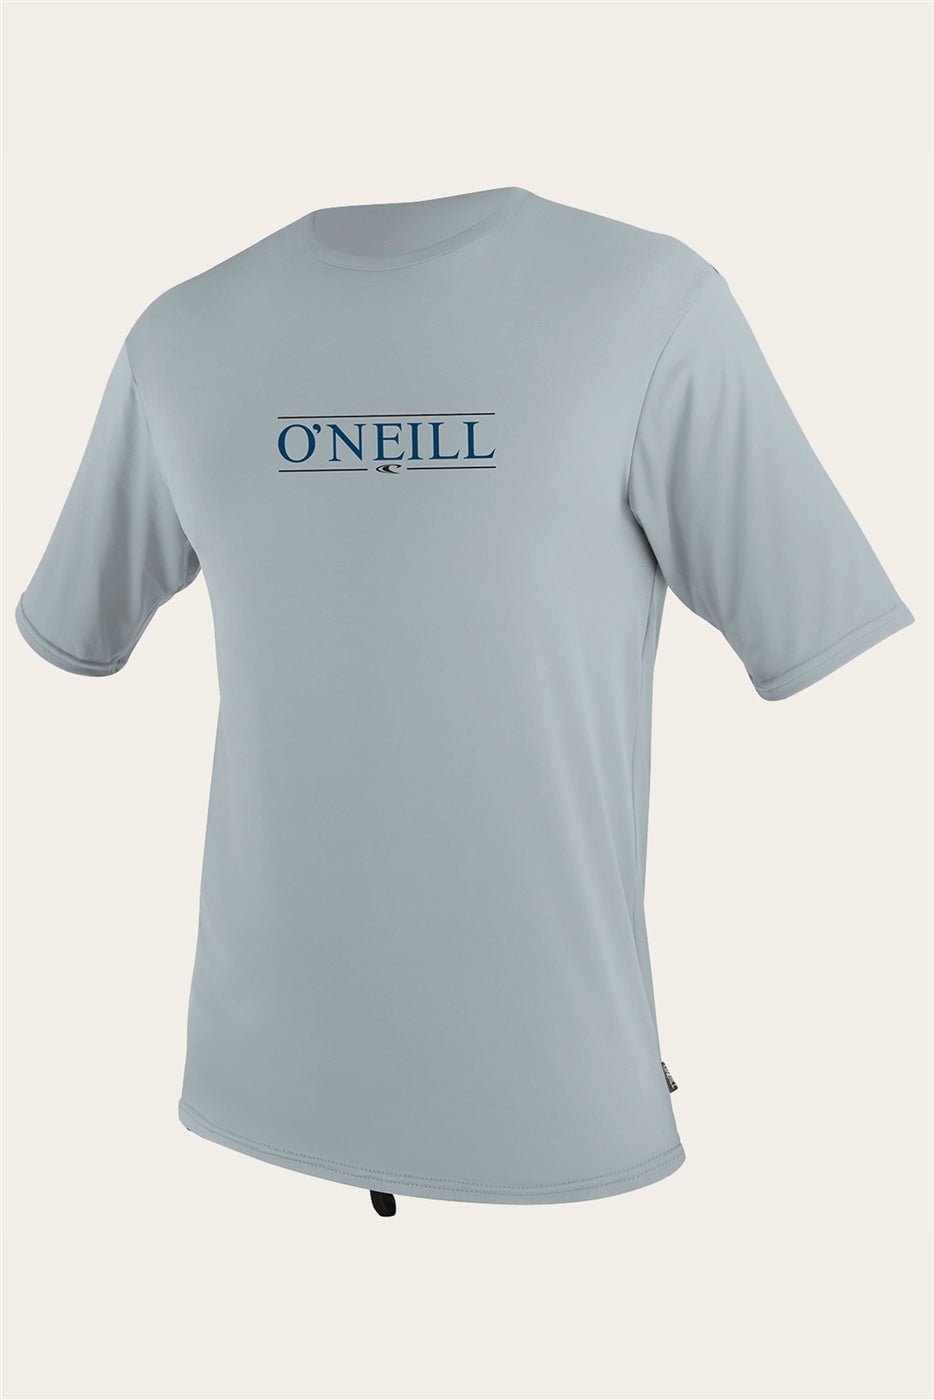 UV Sun Protection and SPF Properties ONeill Premium Skins Short Sleeve Quick Dry Lightweight Rash Vest Top Ocean Cool Grey 